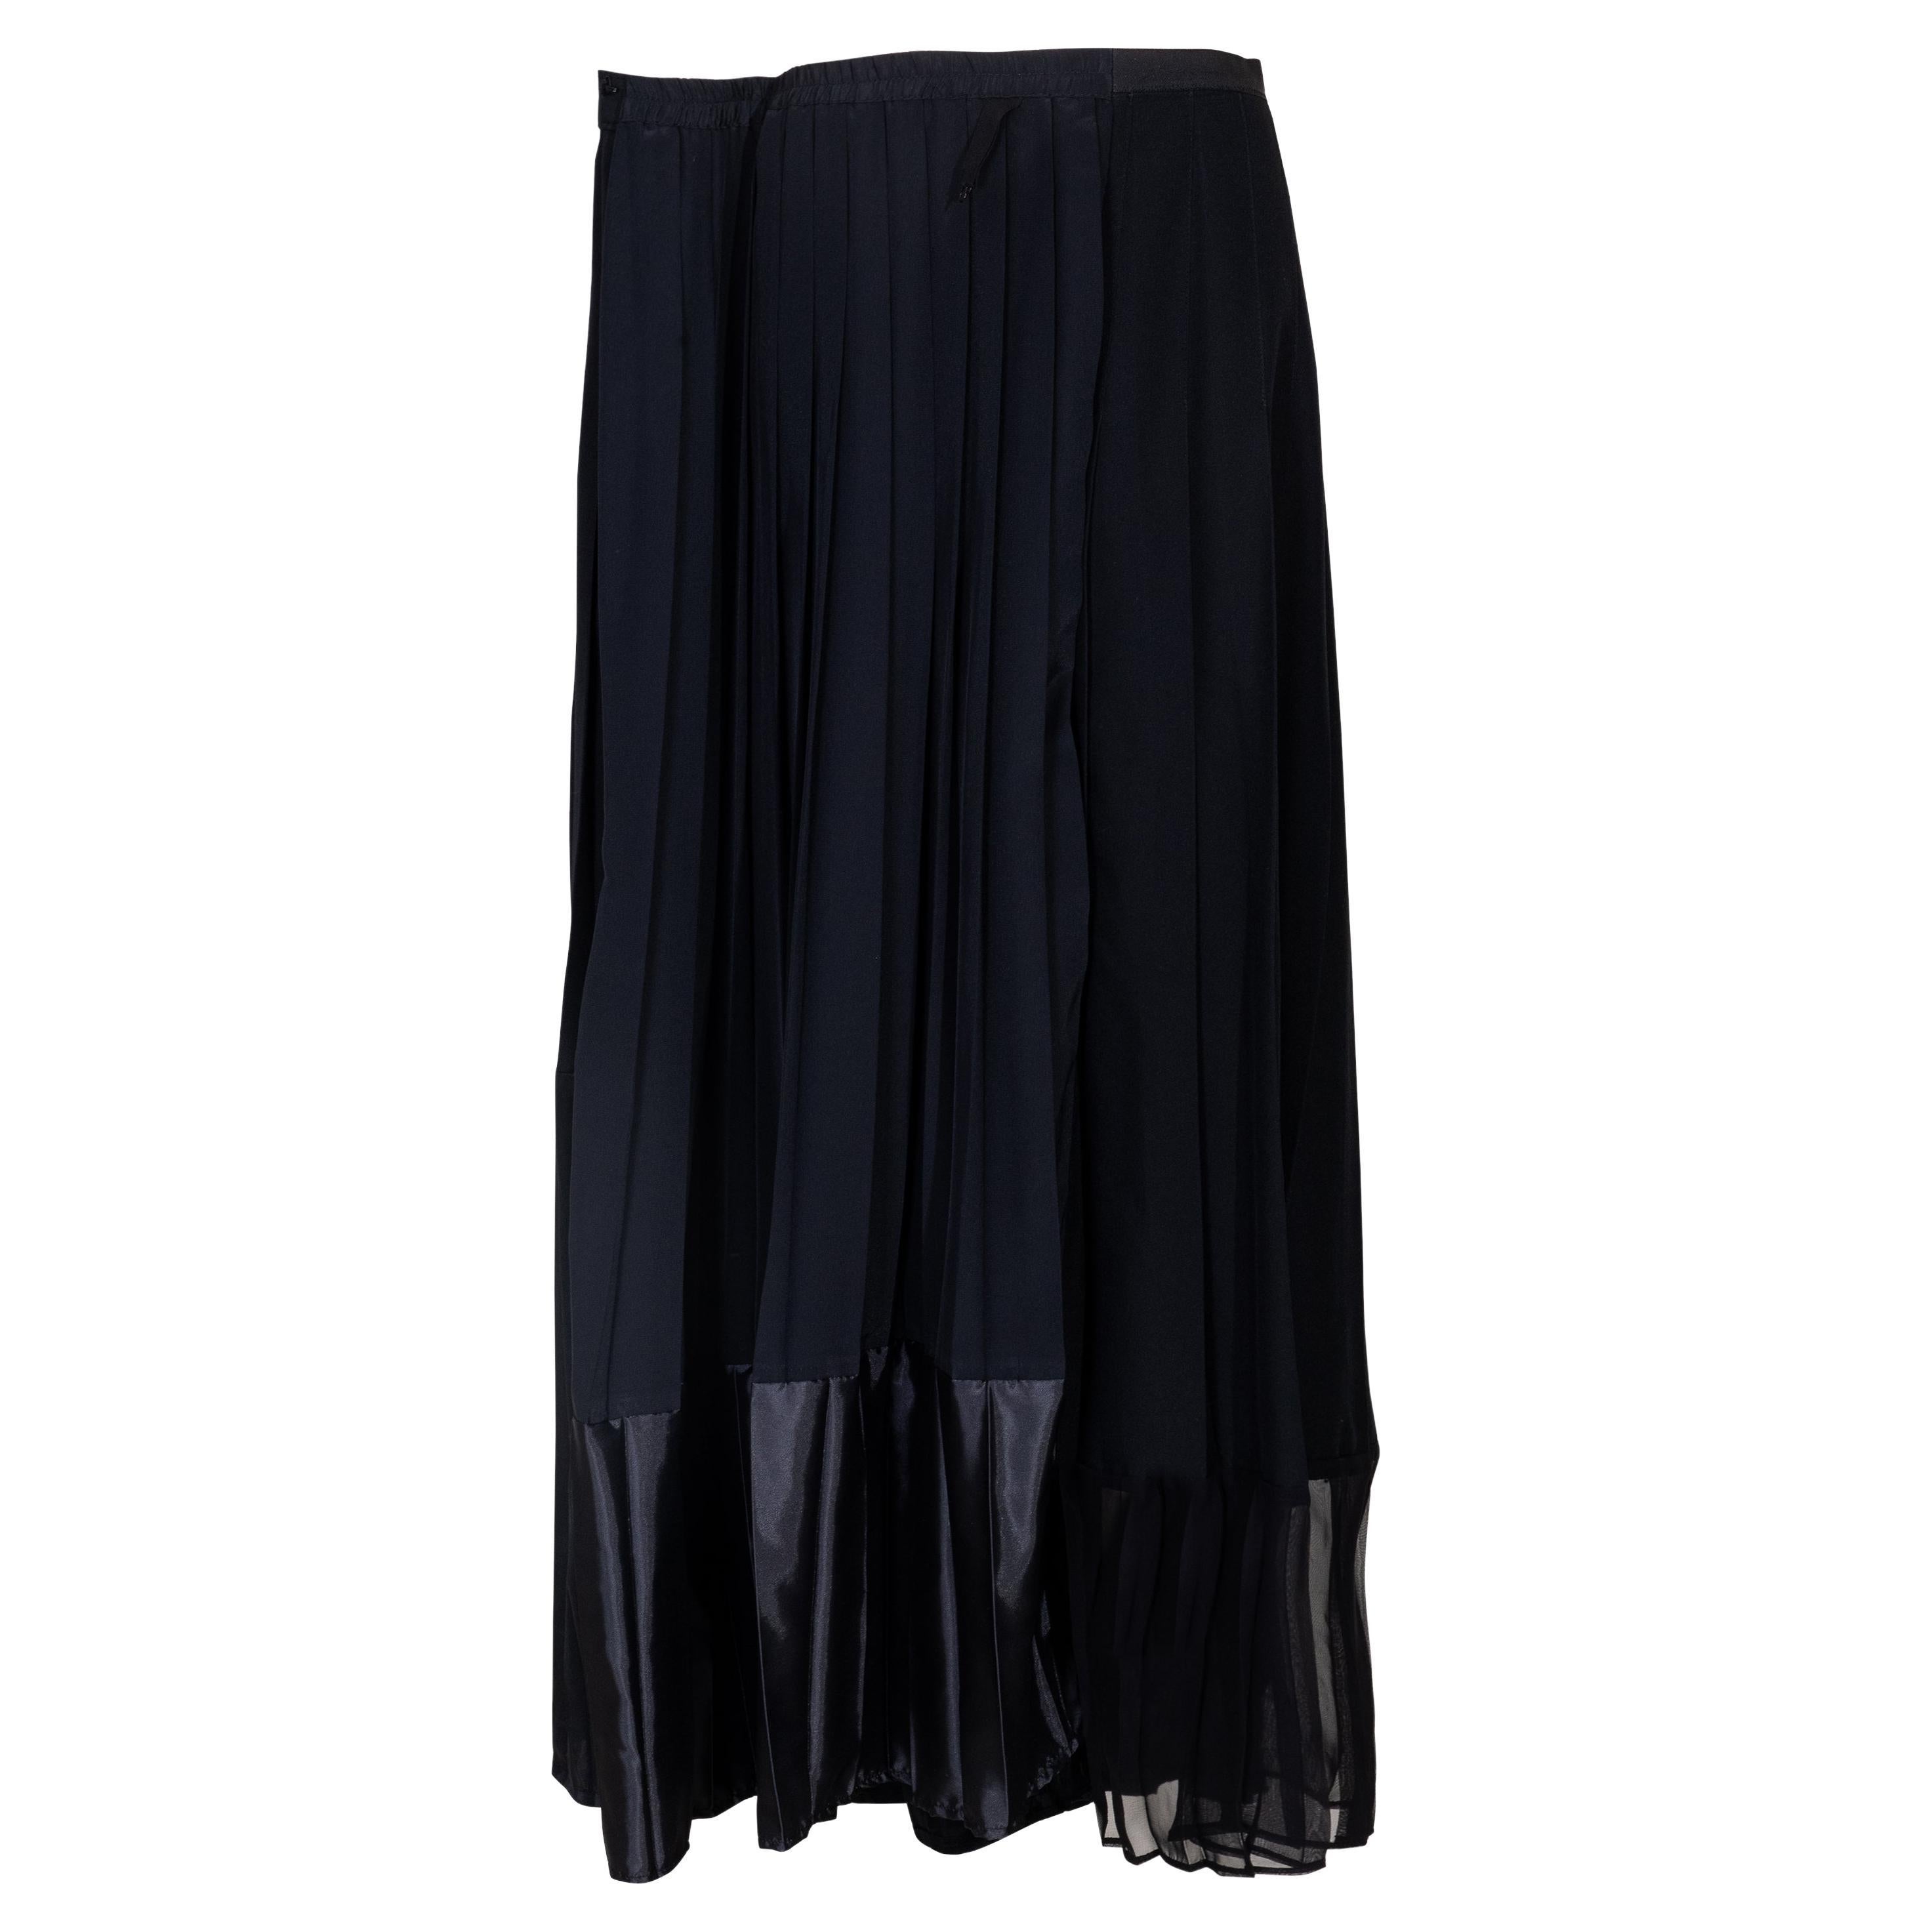 S/S 2001 Maison Martin Margiela One-of-One Black Pleated Artisanal Maxi Skirt For Sale